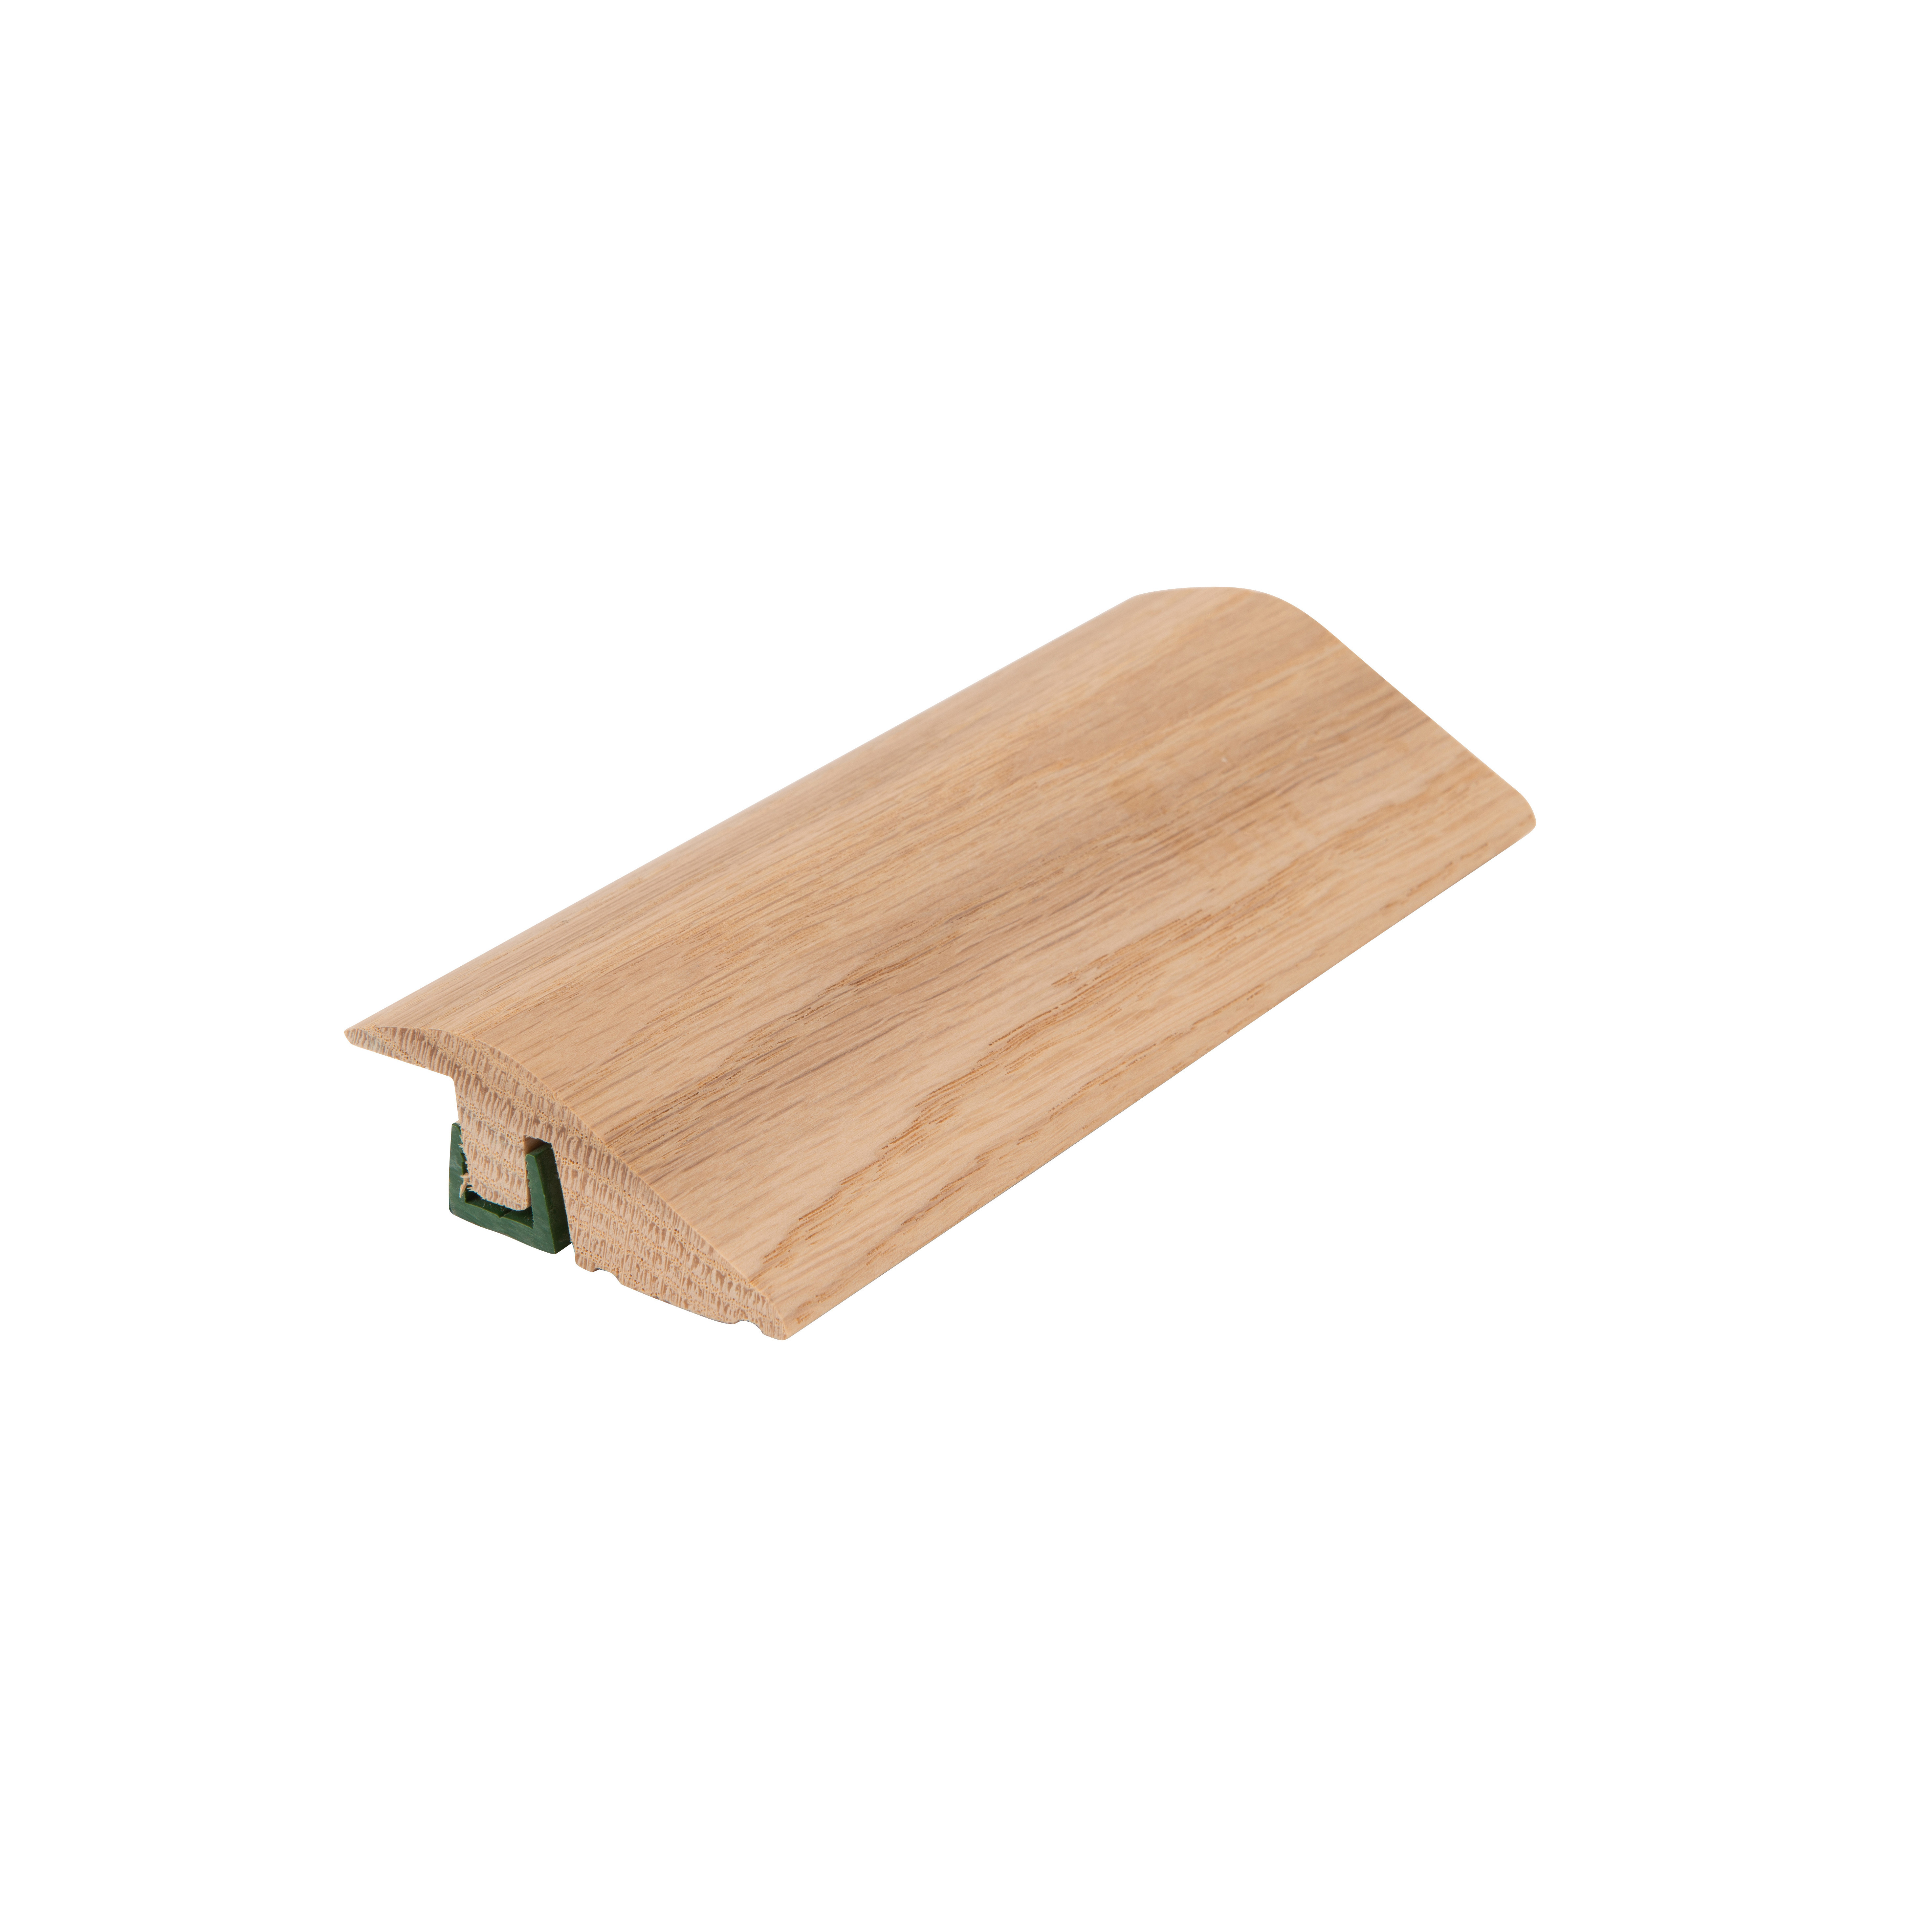 Woodfix Rebated R Section 20mm Rebate Wood Threshold Wood 